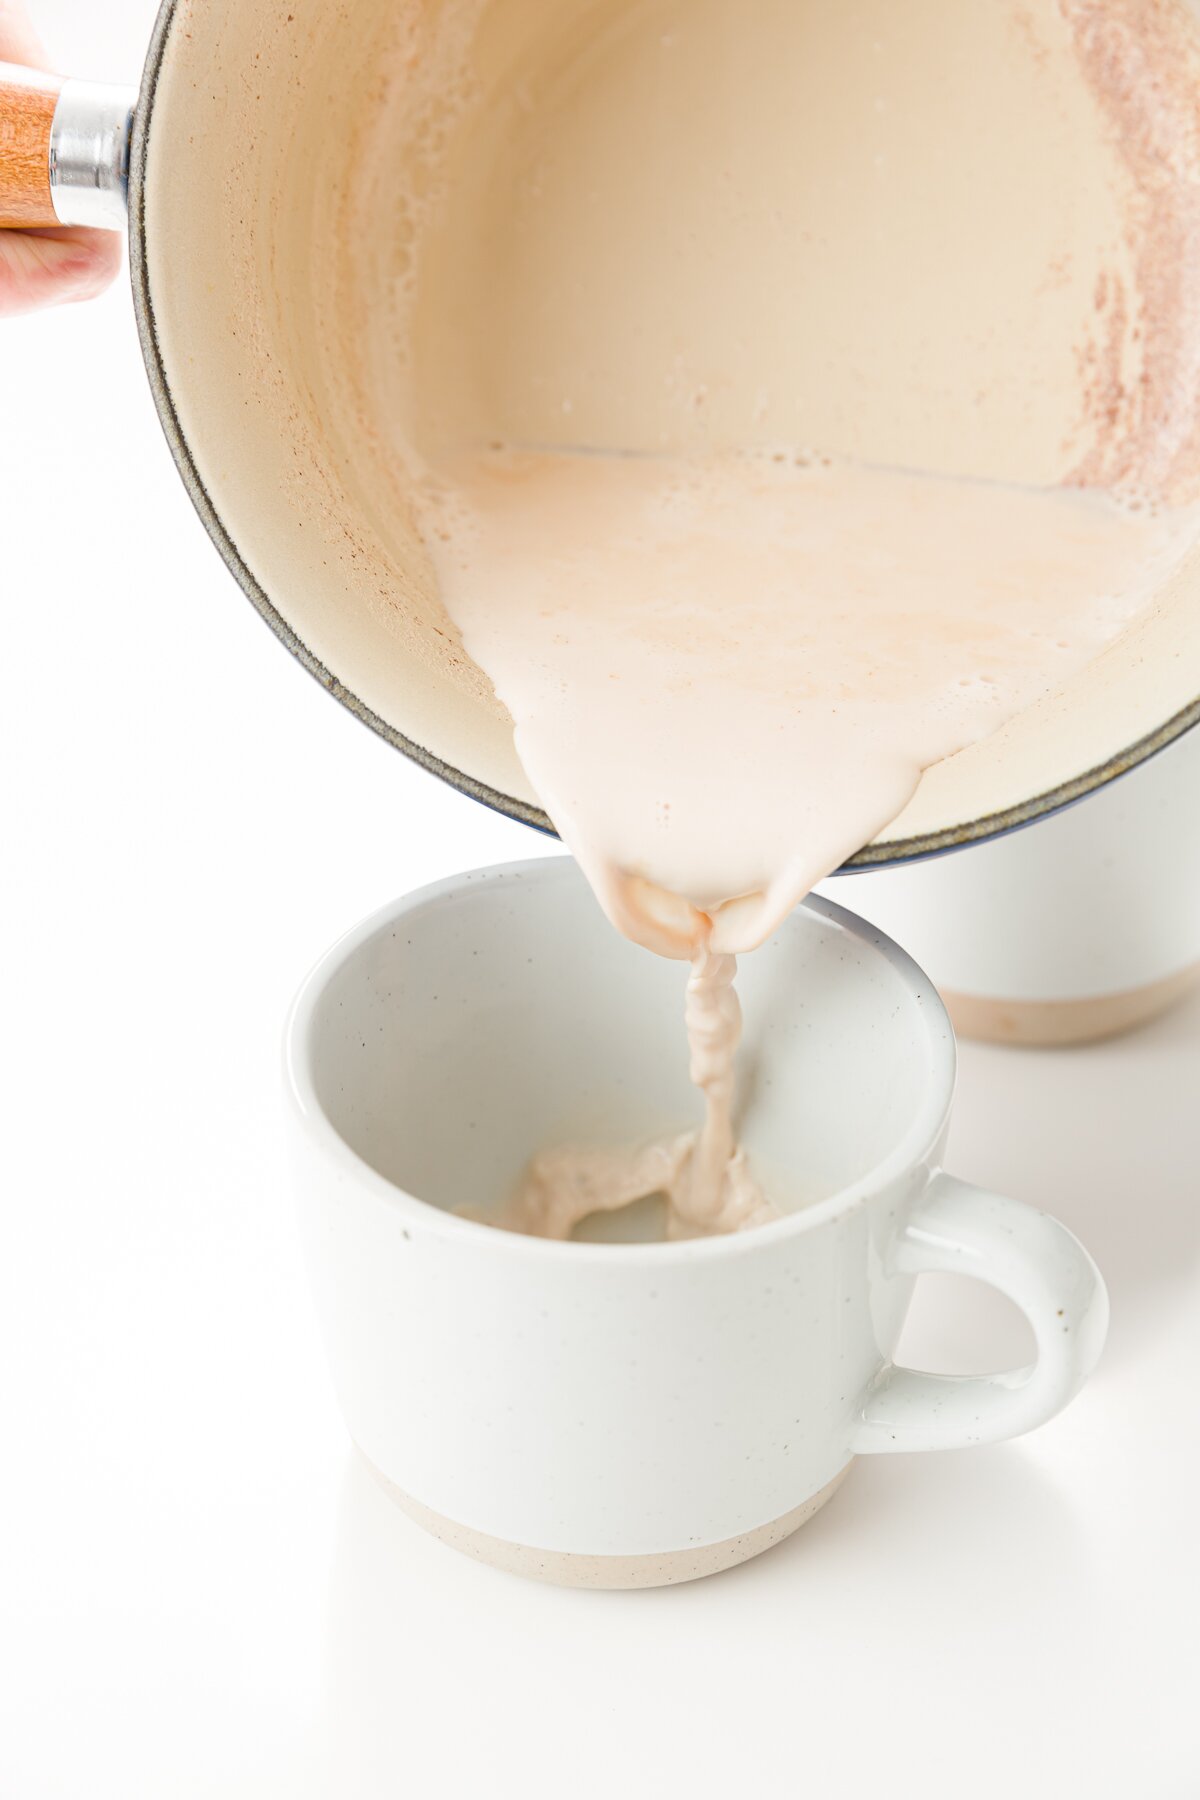 Pouring cinnamon milk from a saucepan into a mug